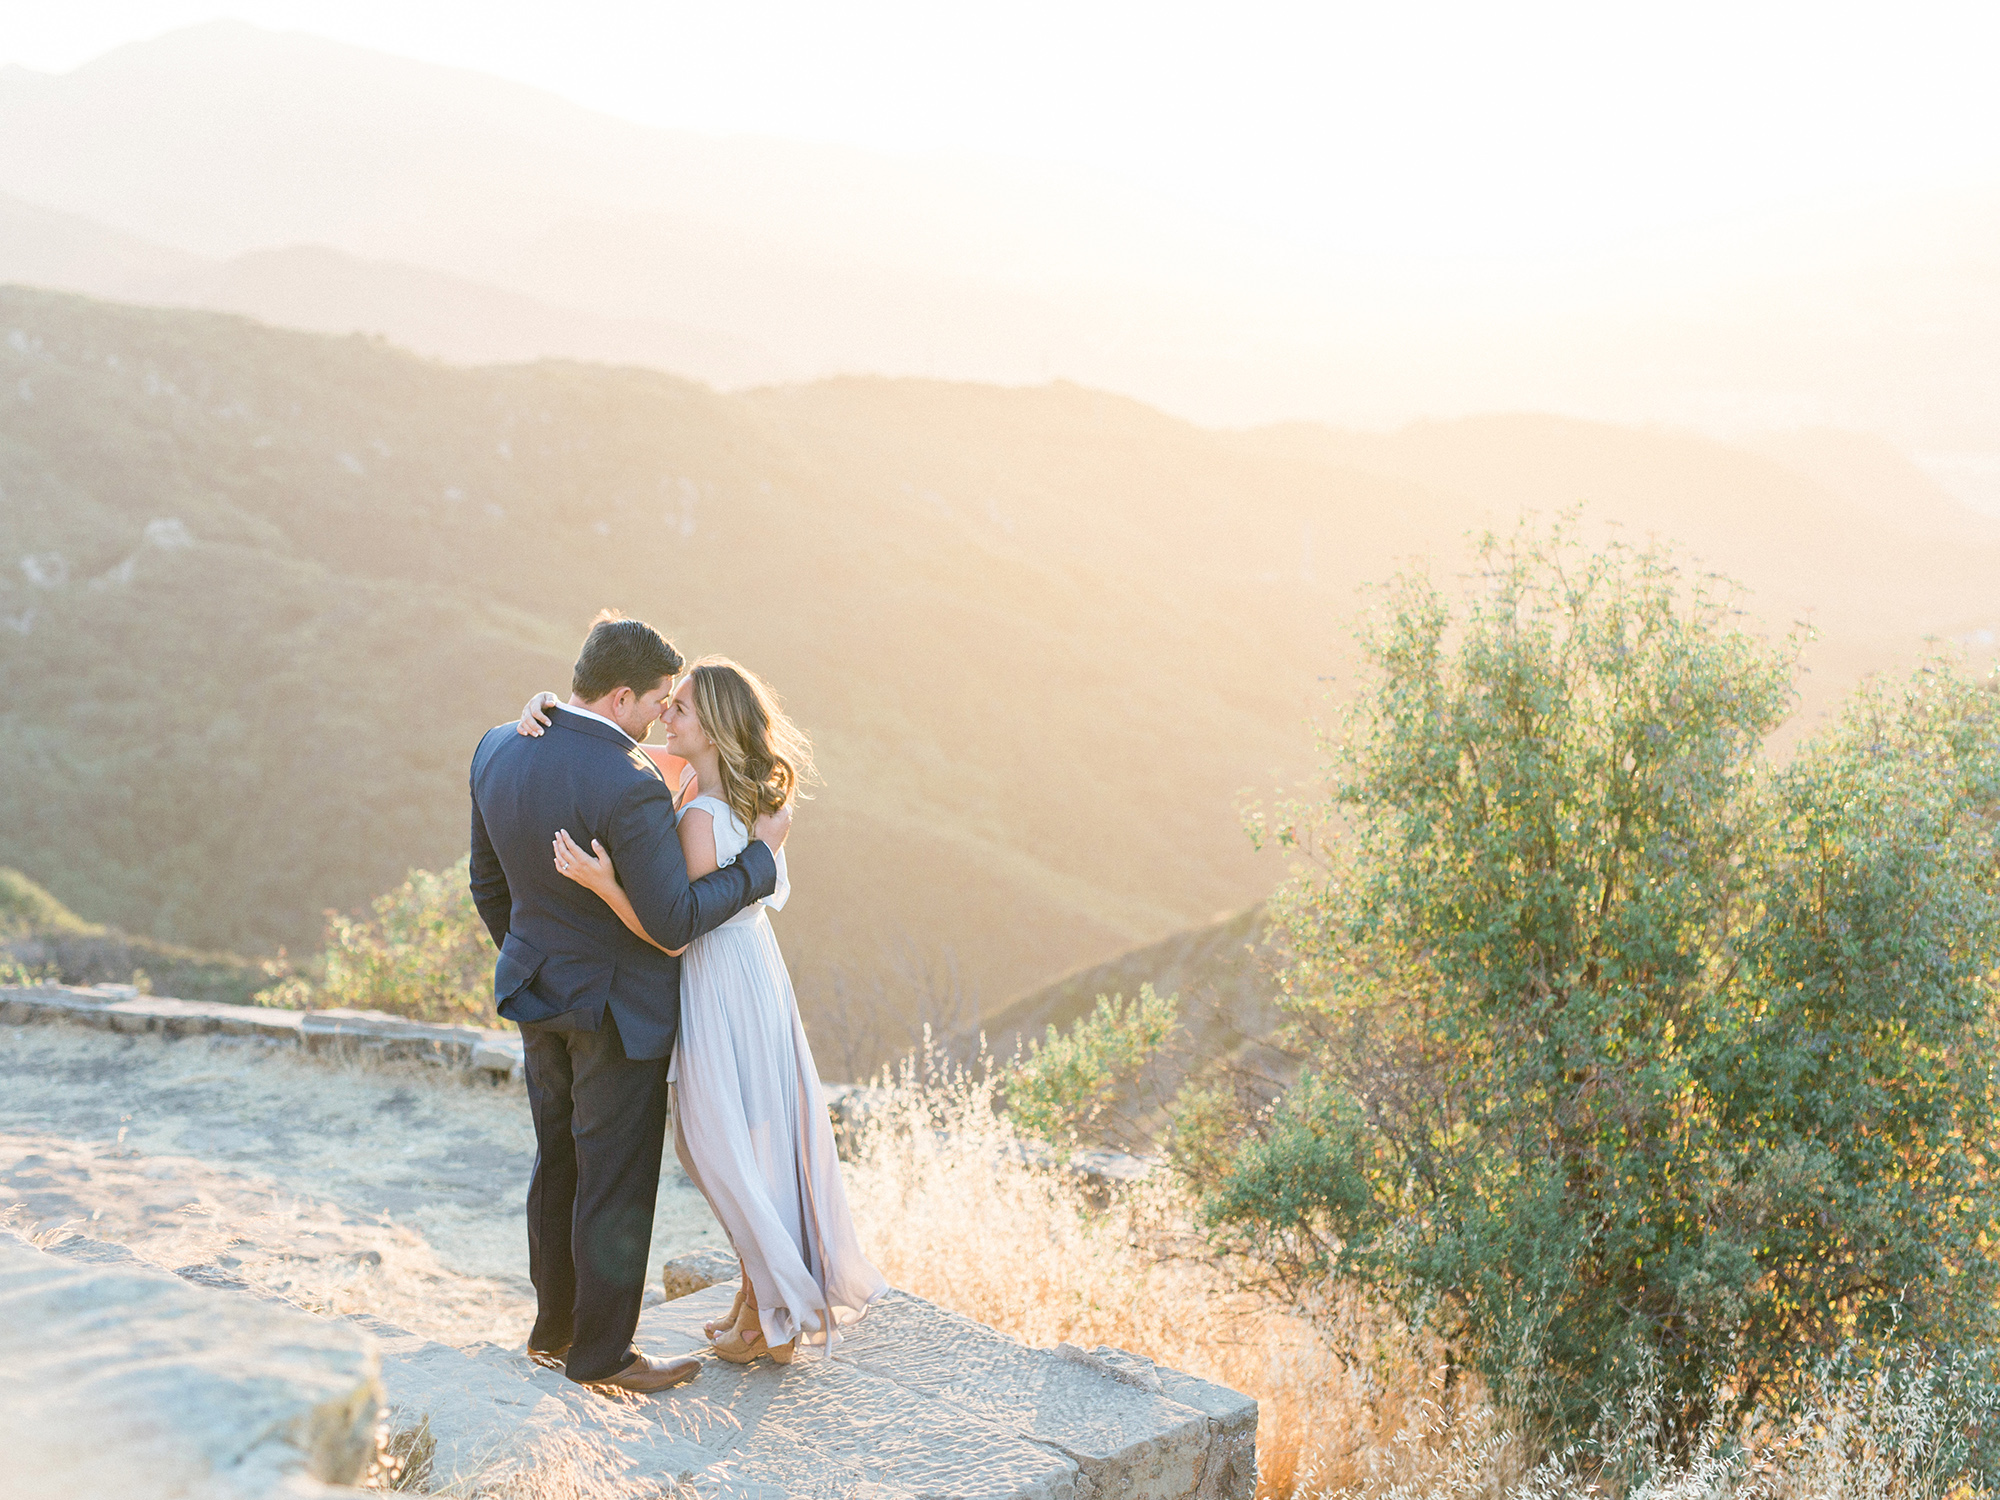 Knapp's Castle anniversary session by Santa Barbara wedding photographer Tenth & Grace.